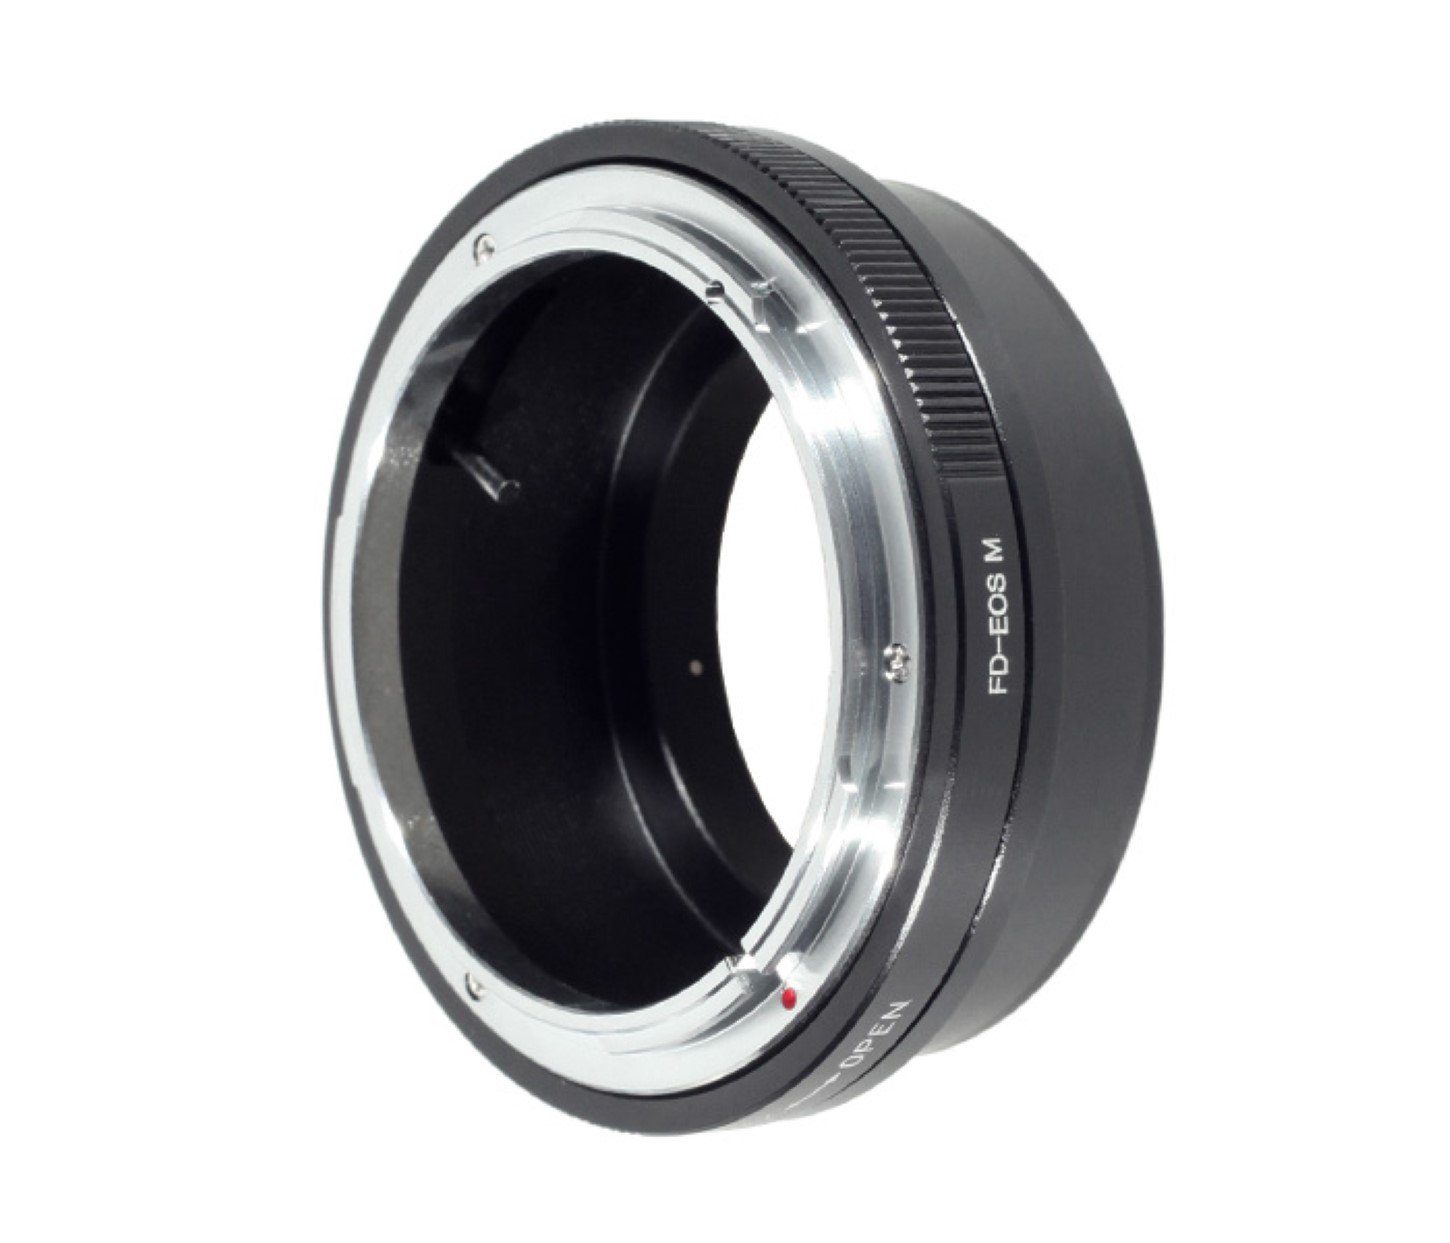 ayex Objektiv-Adapter für Canon FD Objektive an Canon EOS M Kamera Objektiveadapter